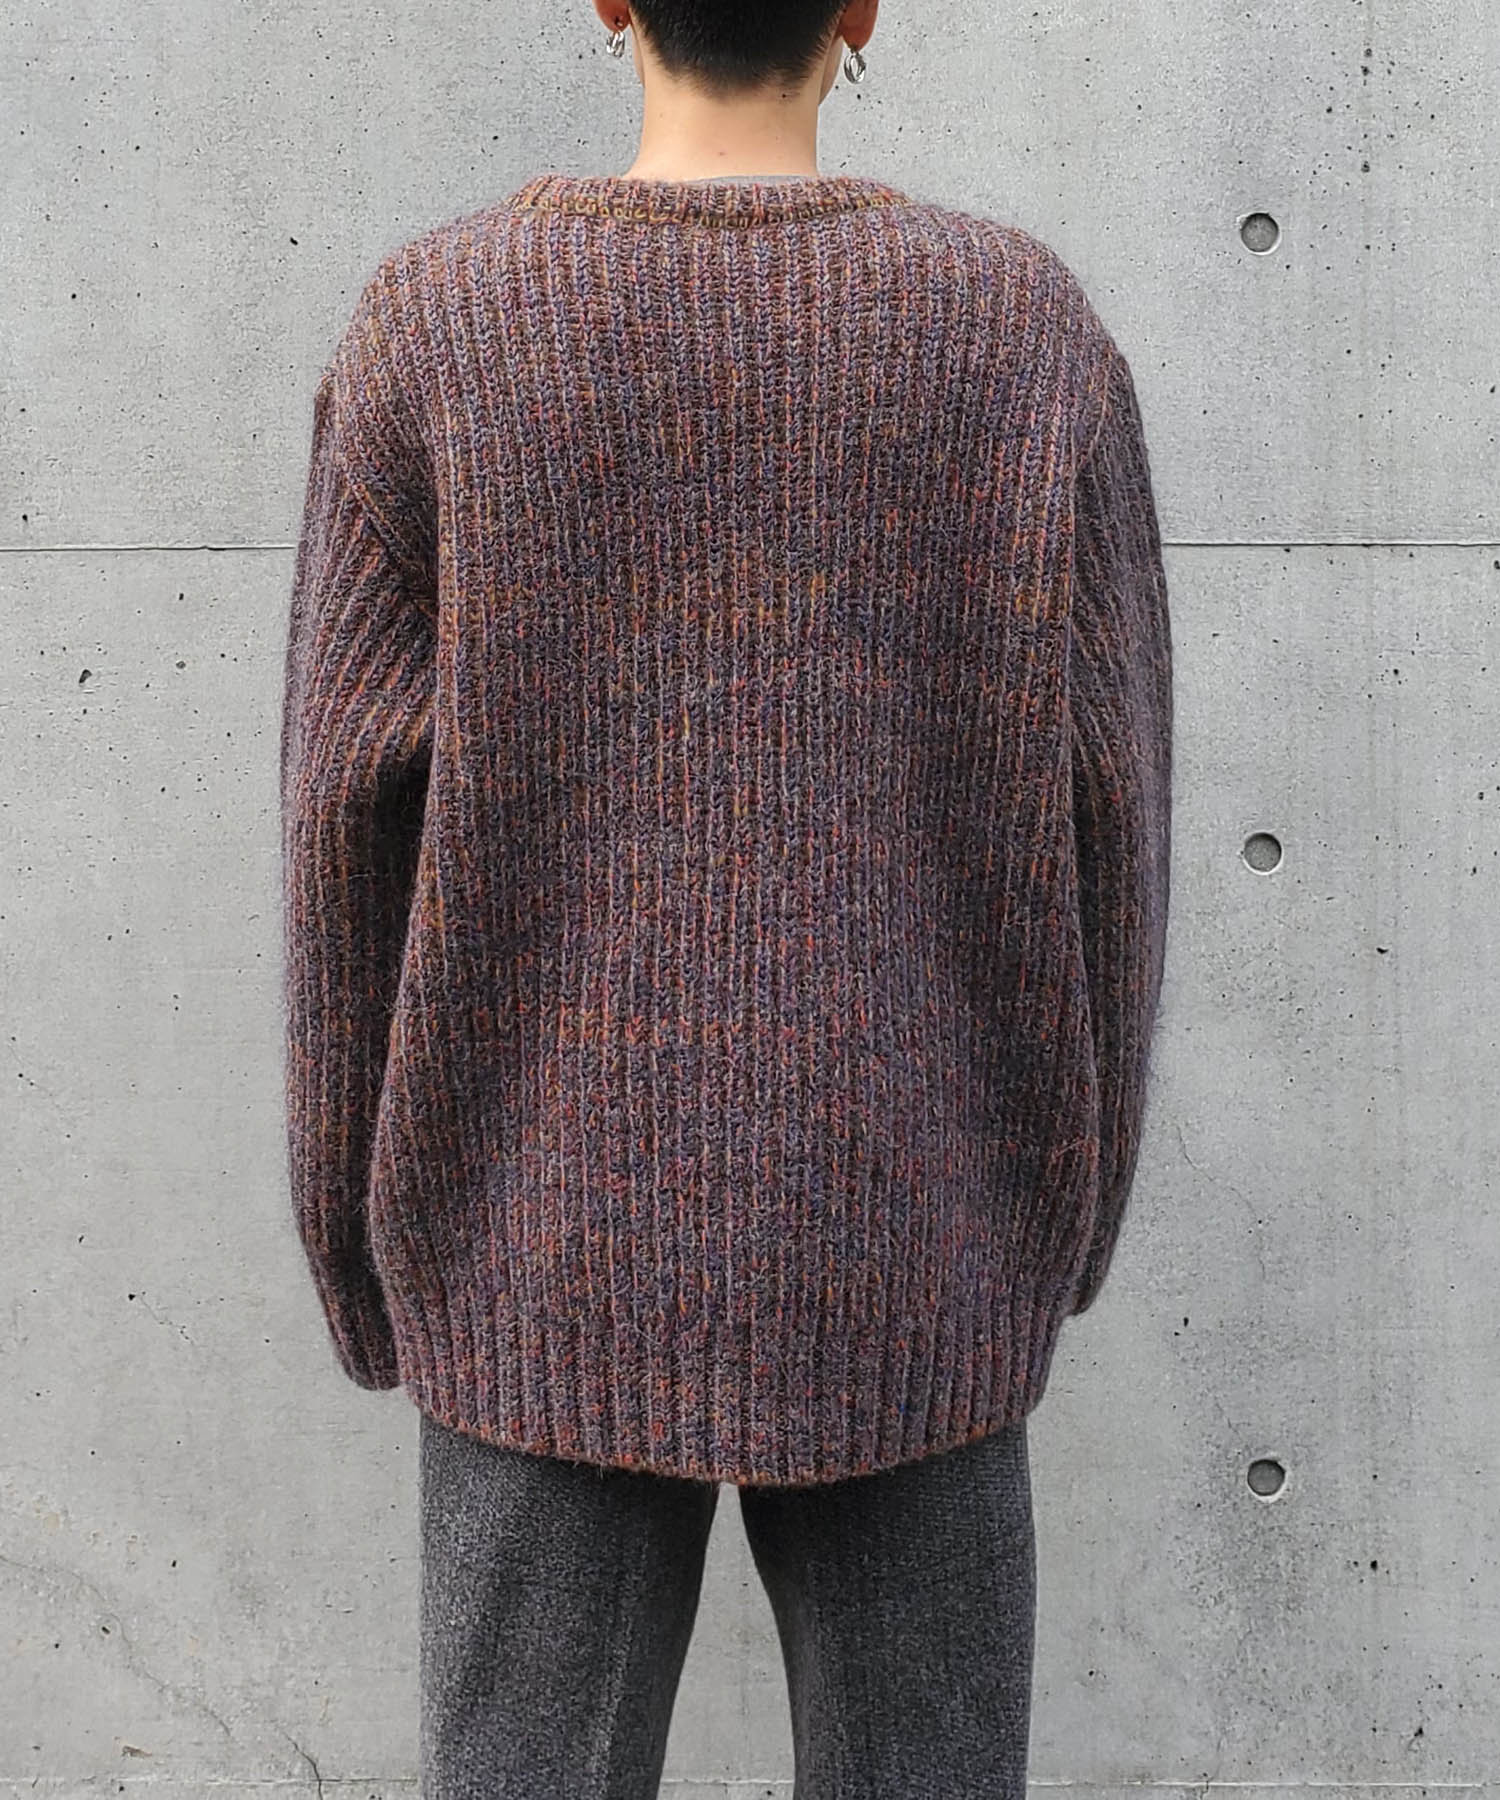 Six yarns-12 colors knit